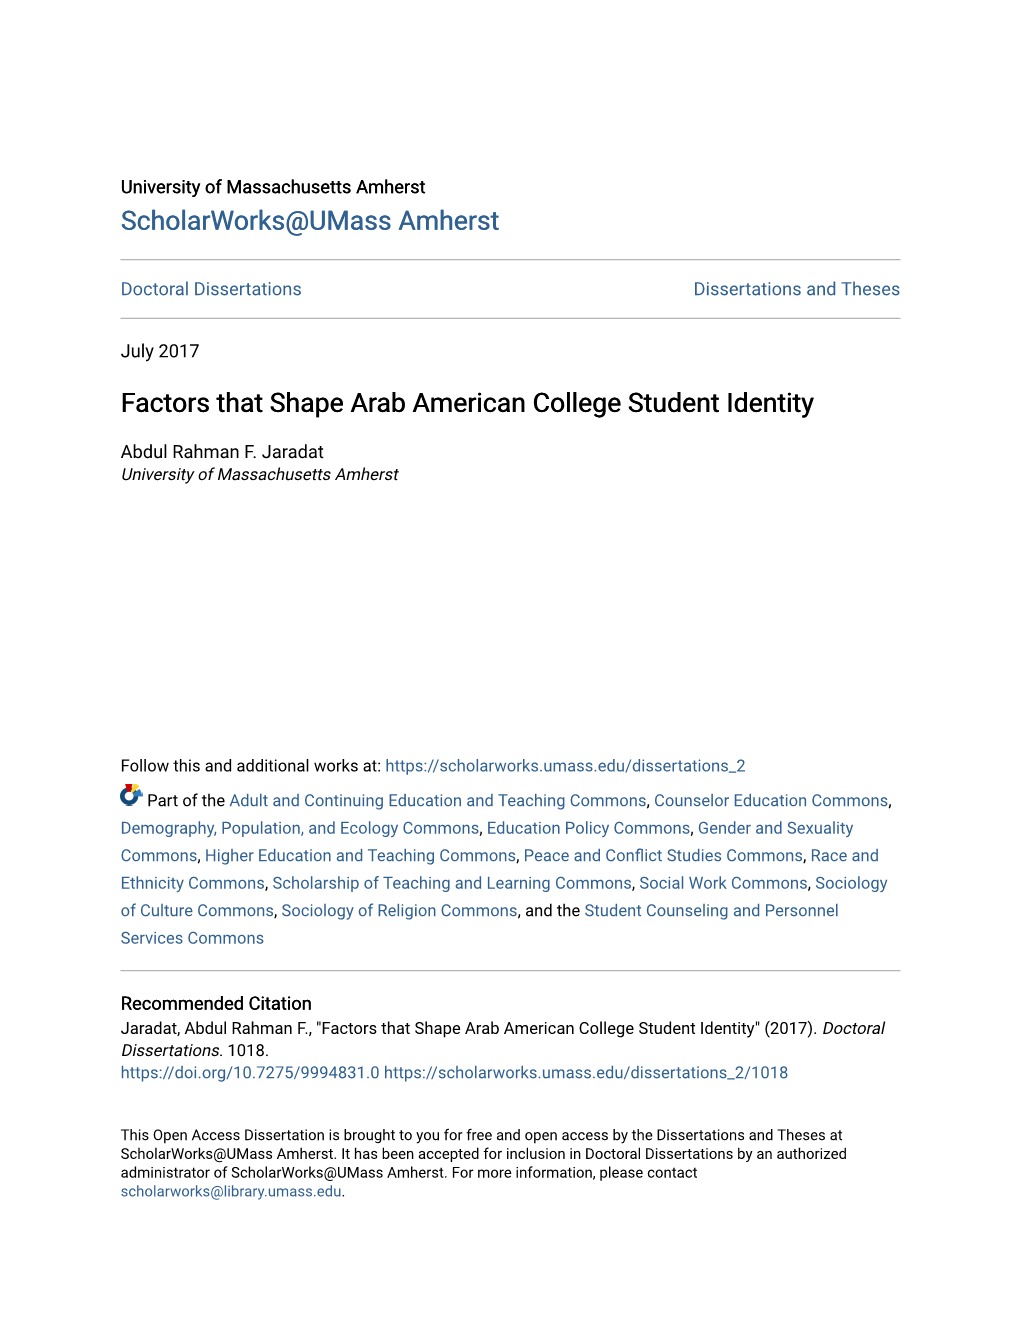 Factors That Shape Arab American College Student Identity